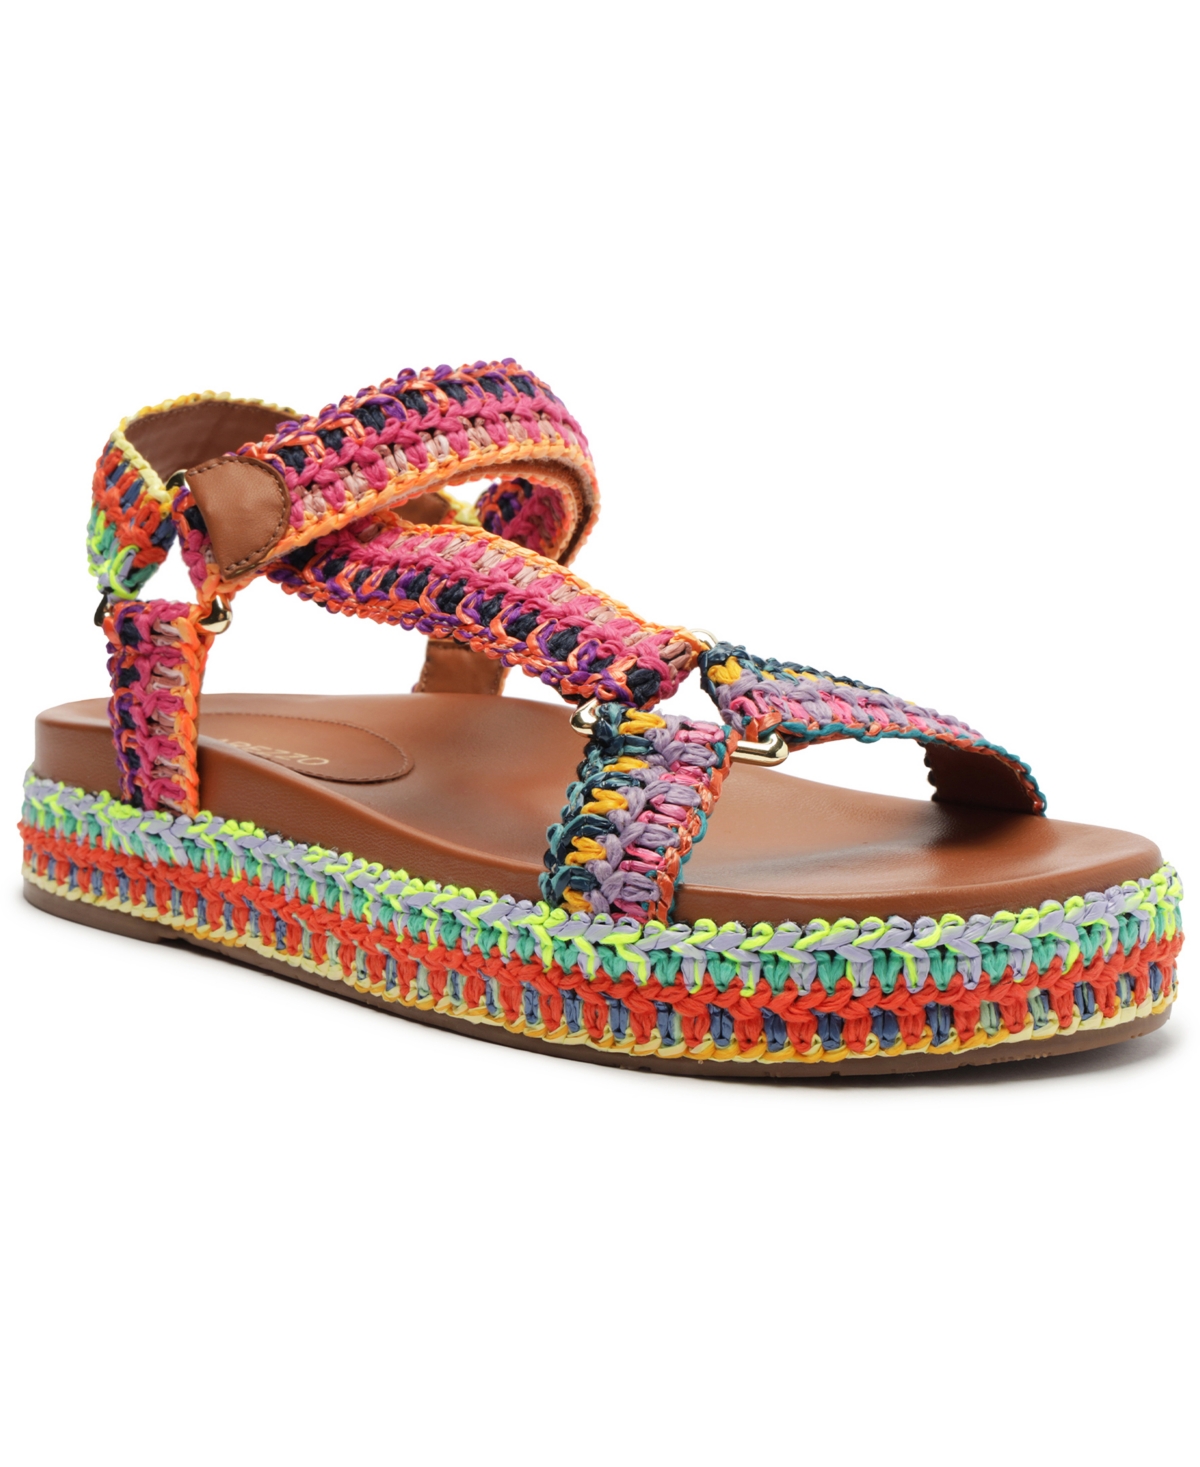 Women's Mya Woven Flat Sandals - Bright Multi